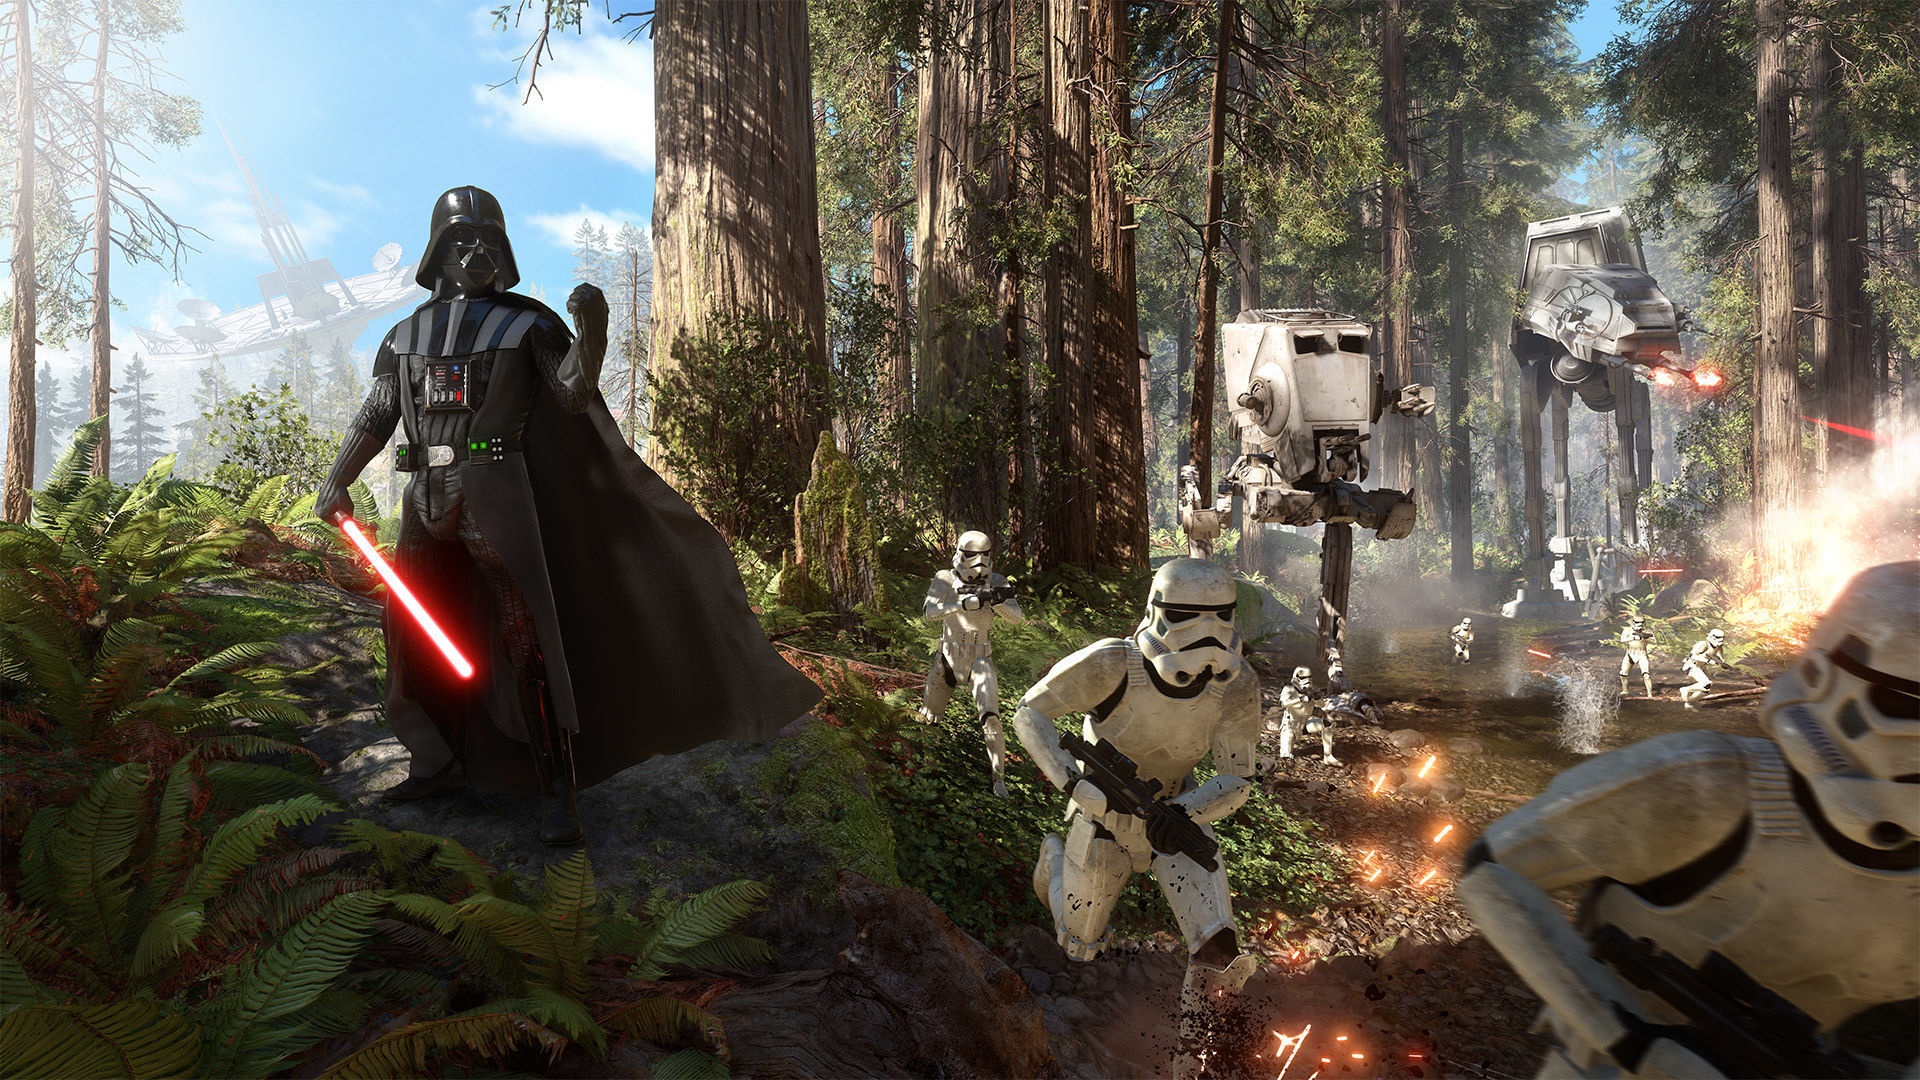 Wallpaper Star Wars Battlefront Stormtrooper Forest - Star Wars Battlefront Endor - HD Wallpaper 